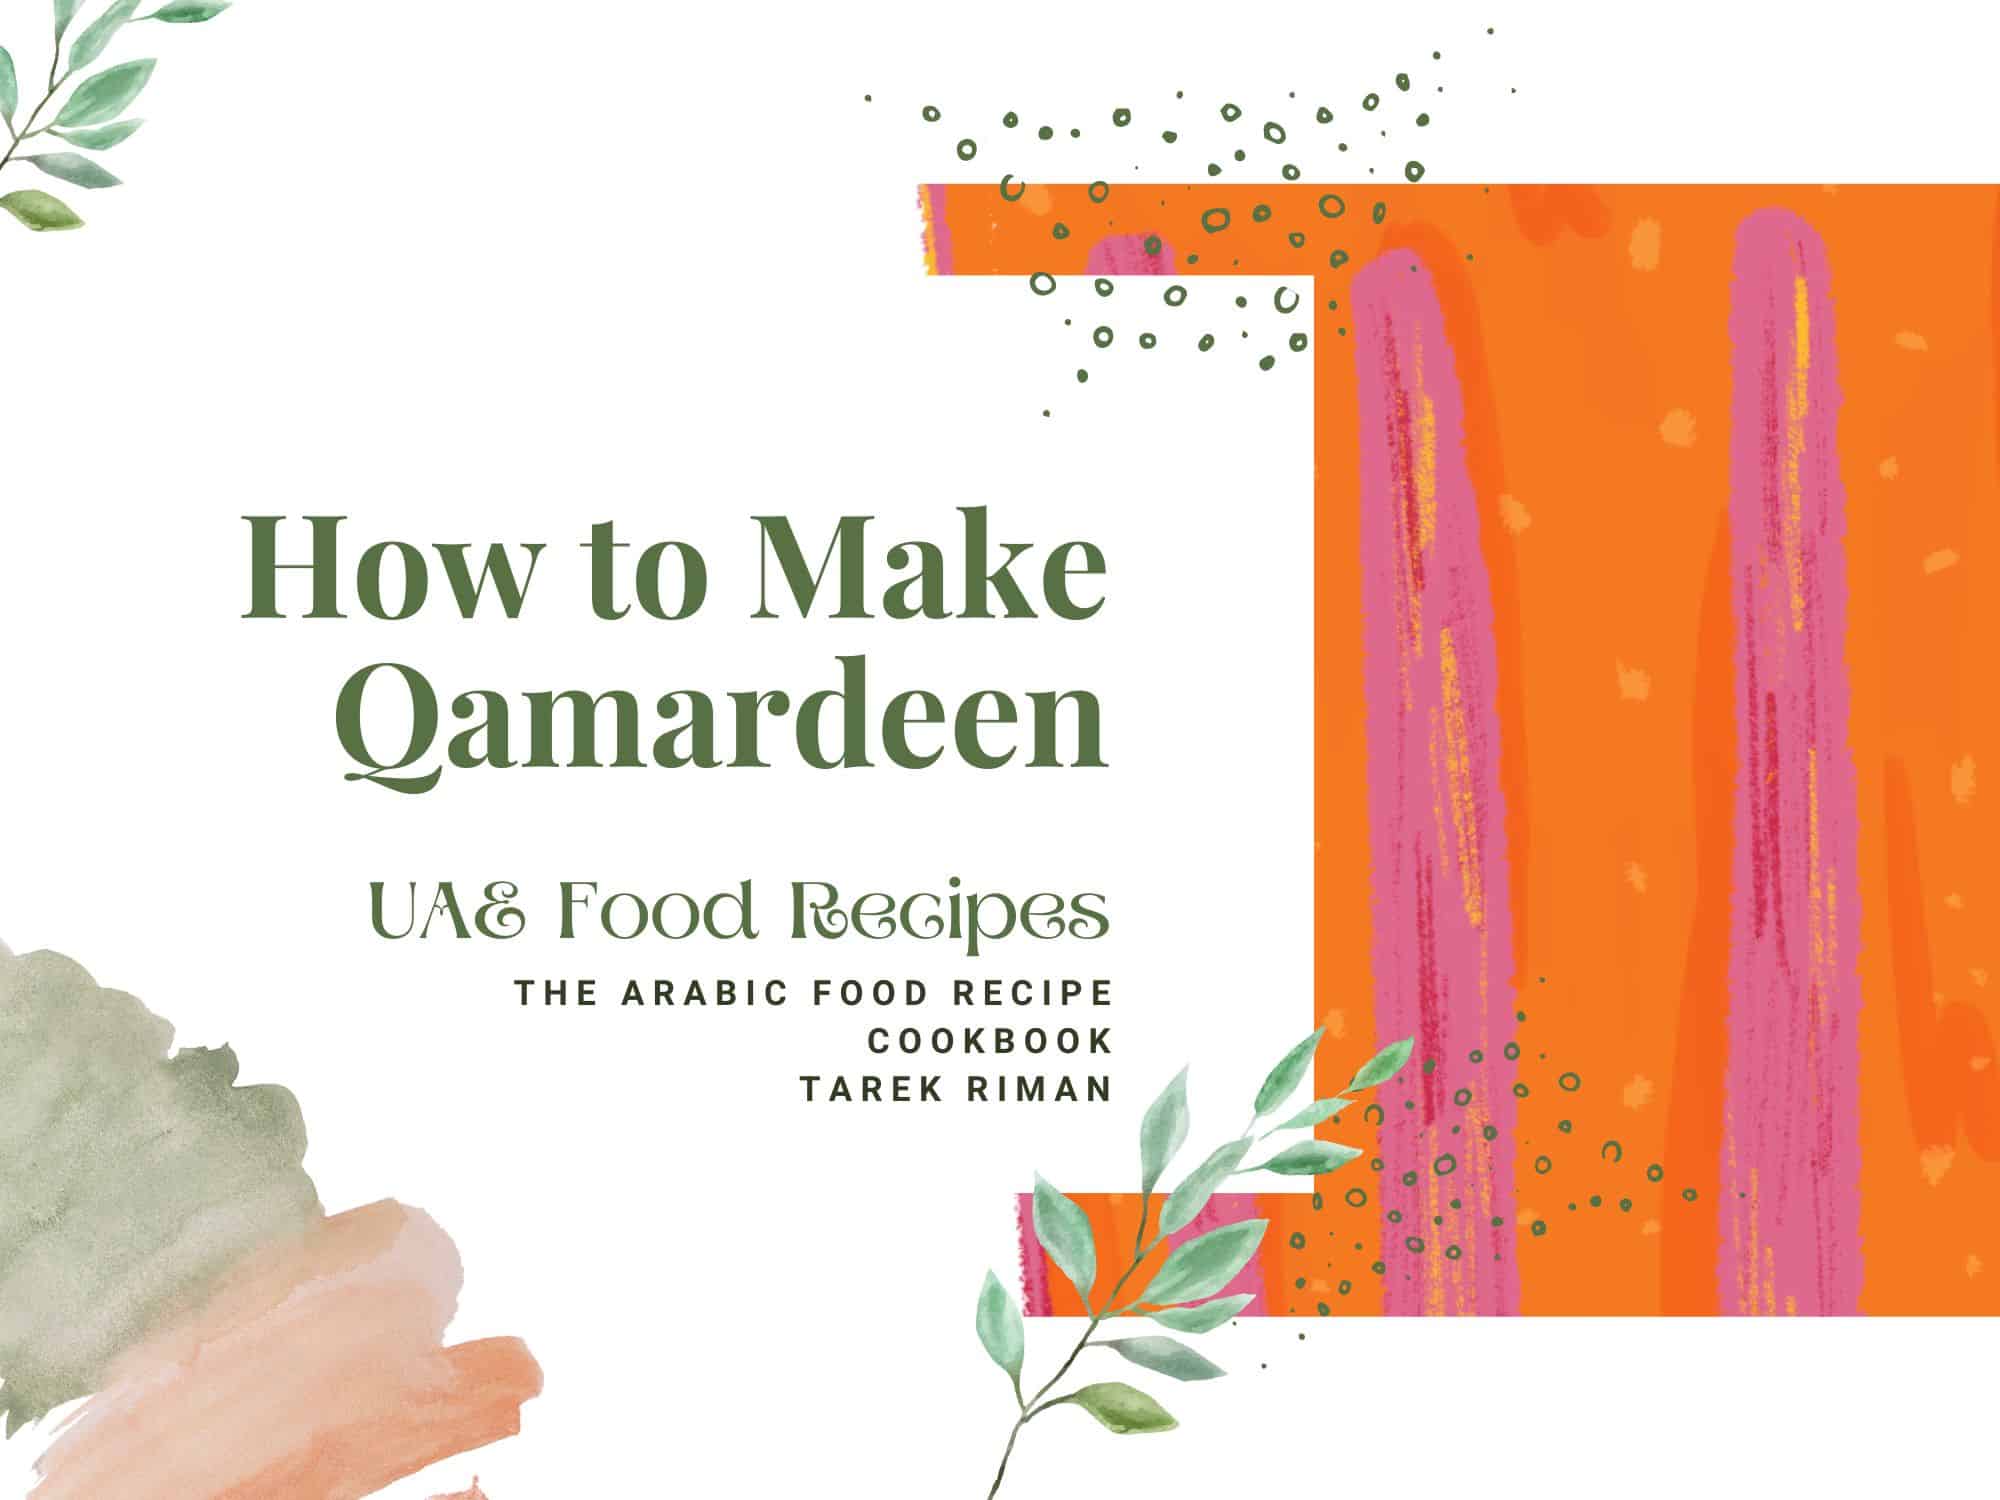 How to Make Qamardeen